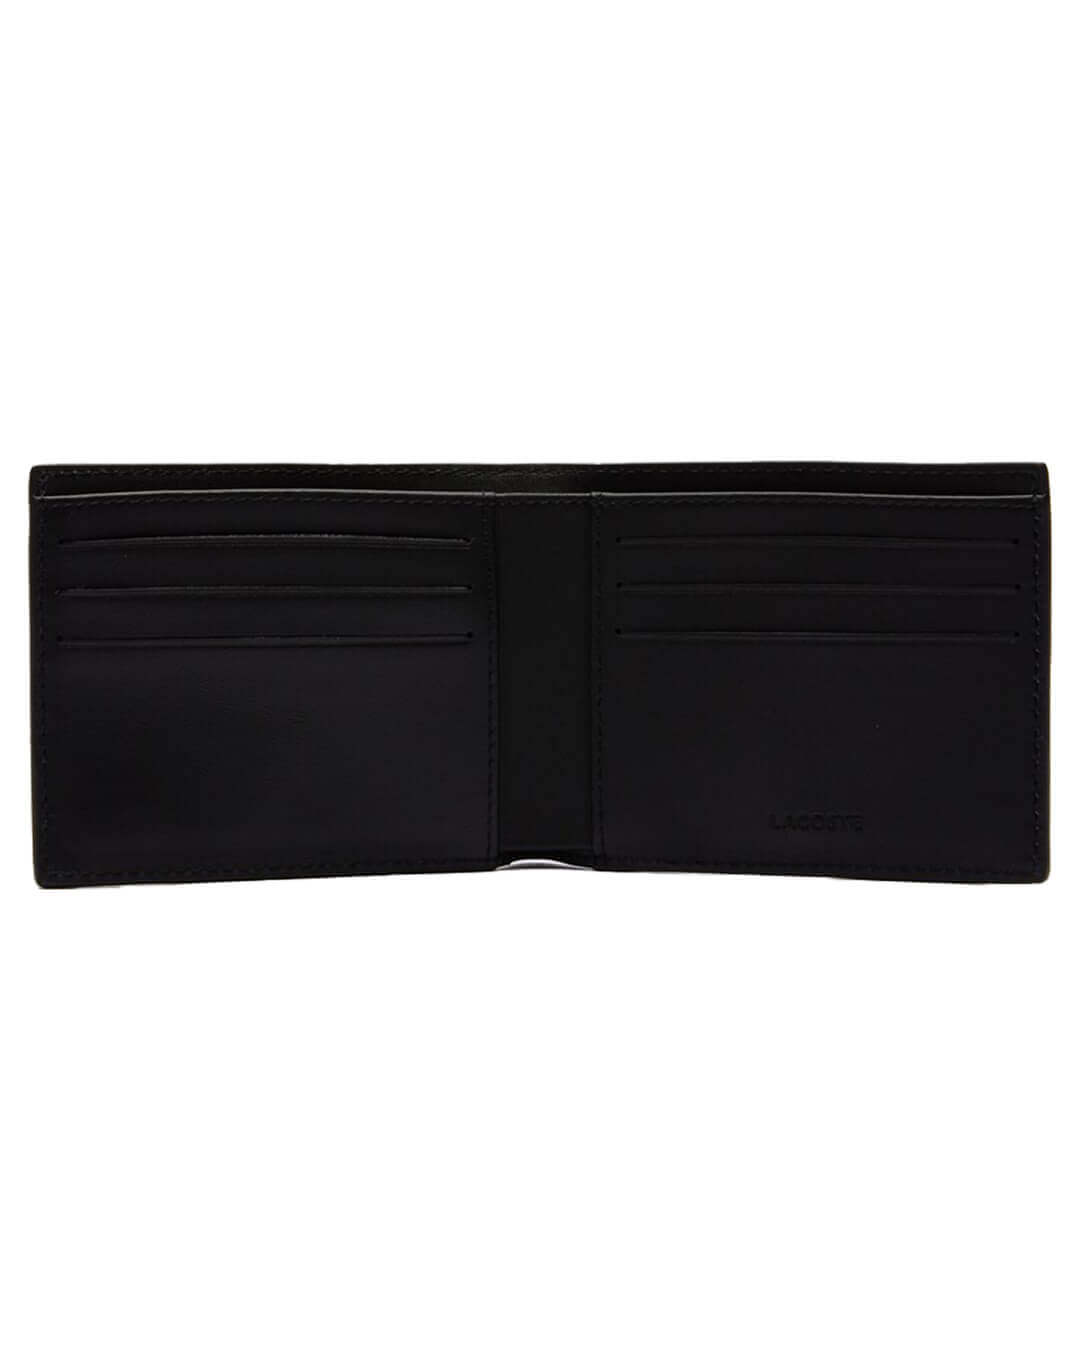 Lacoste Wallet ONE SIZE Lacoste Fitzgerald Leather Black Six Card Wallet